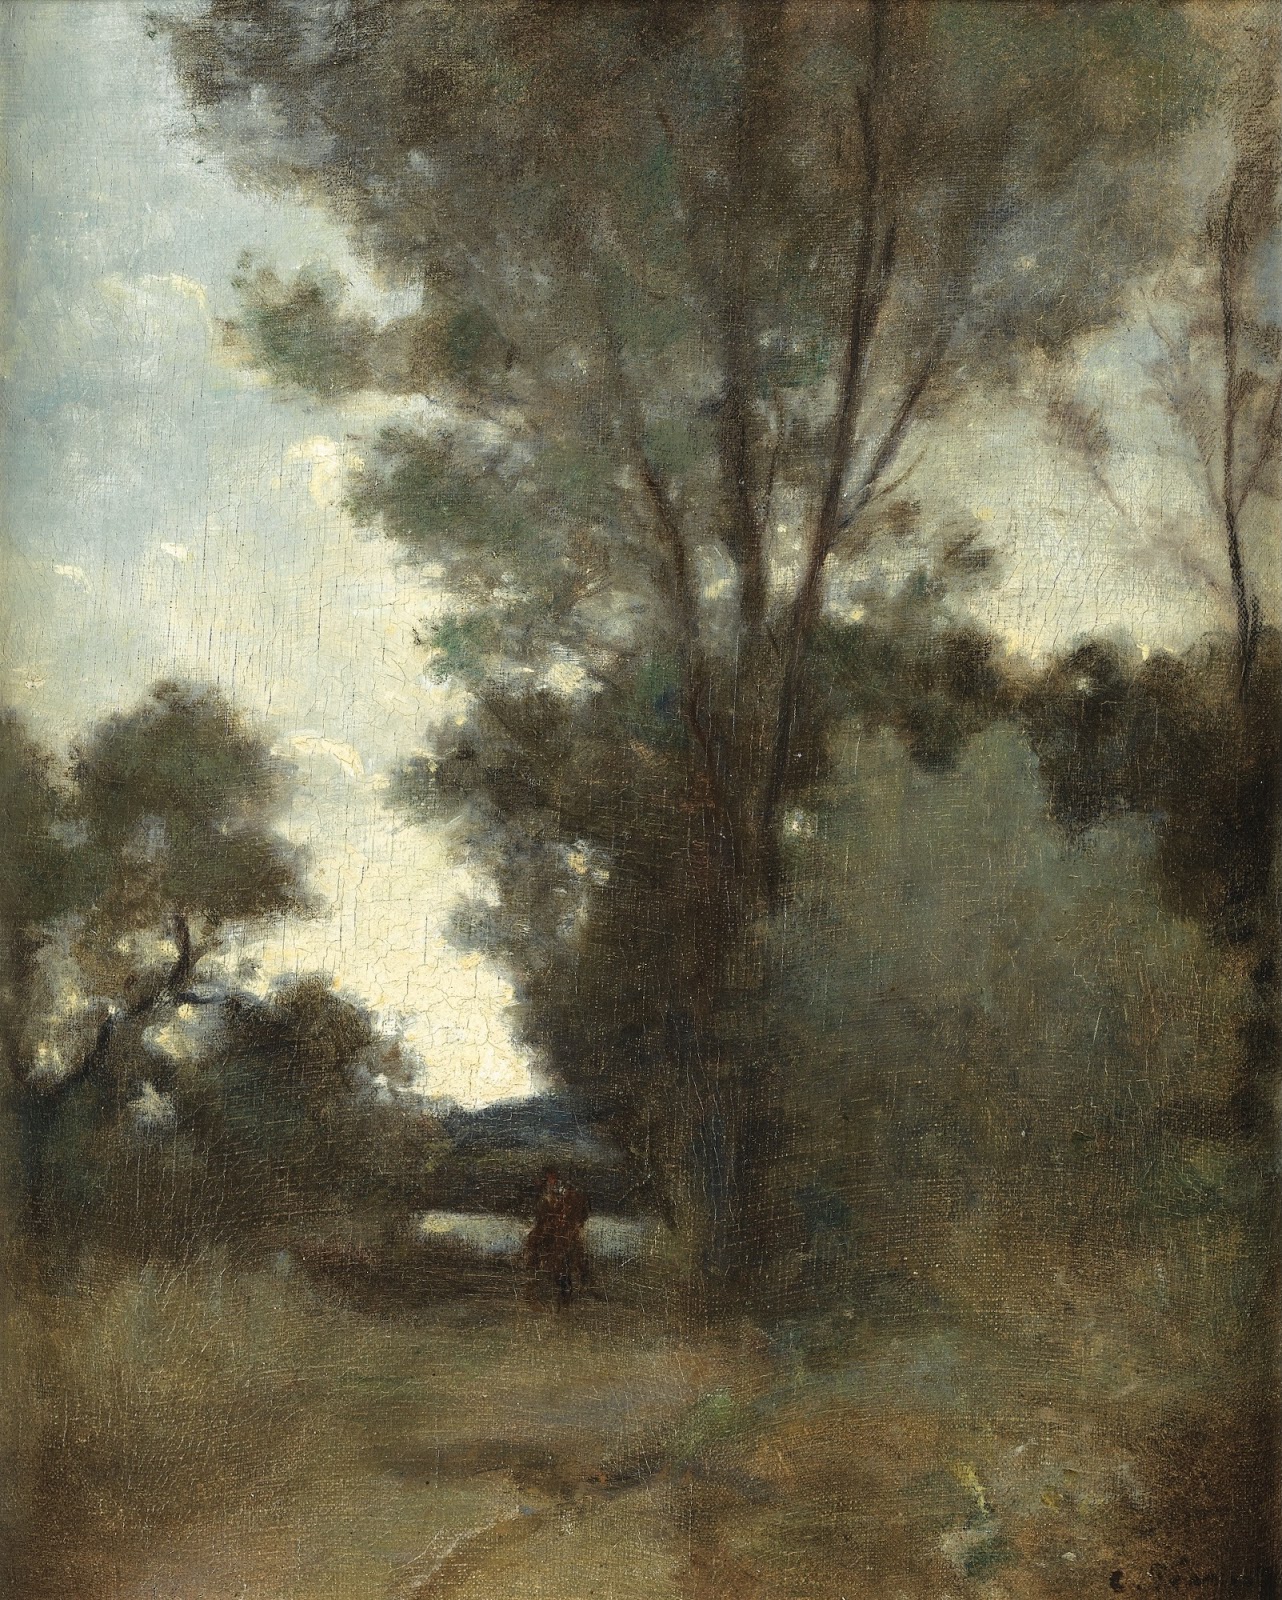 Camille+Pissarro-1830-1903 (404).jpg